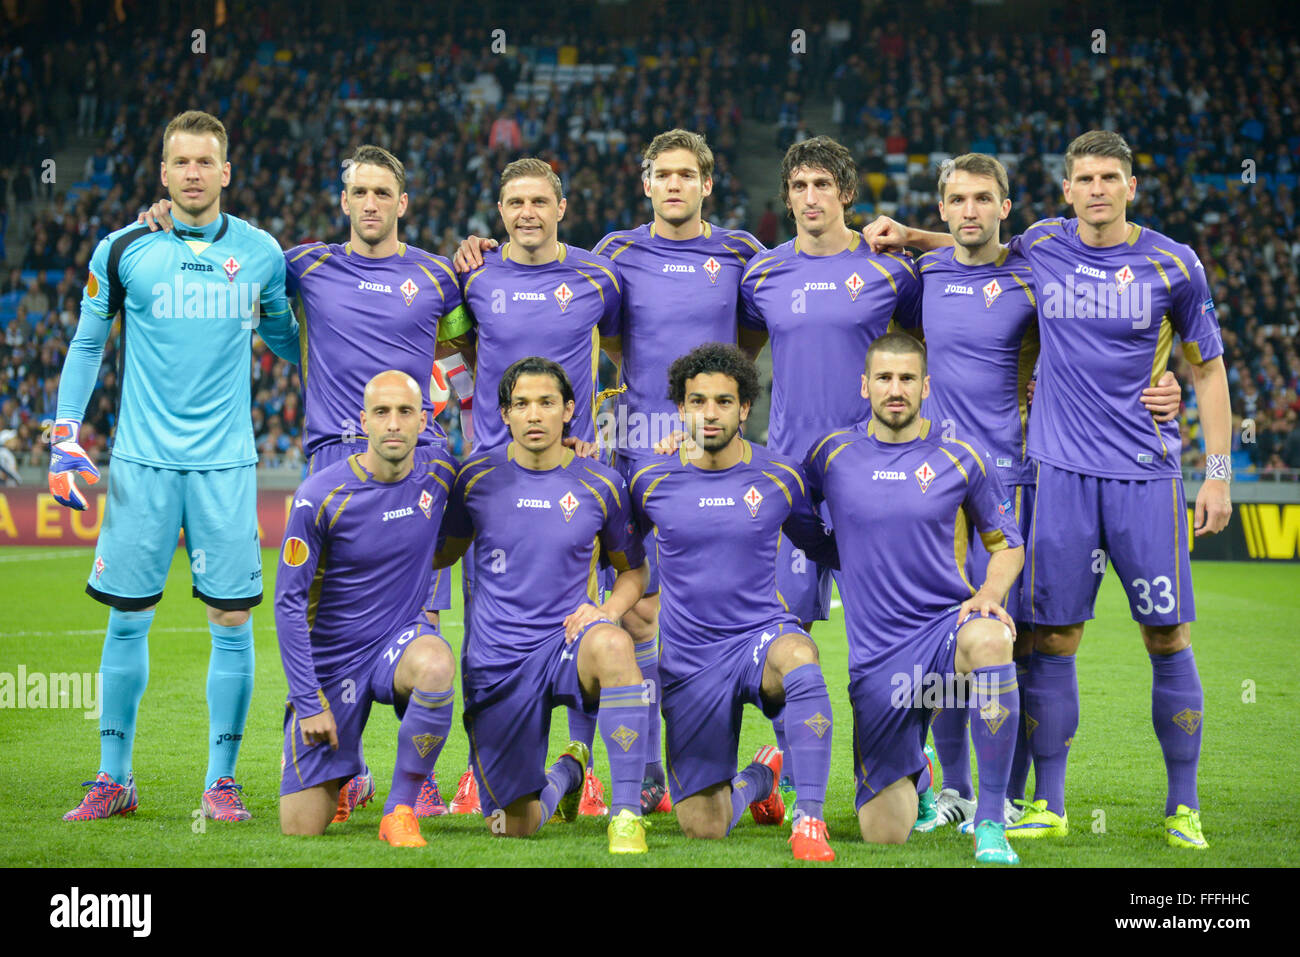 ACF Fiorentina Official Squad 2023-24, Serie A